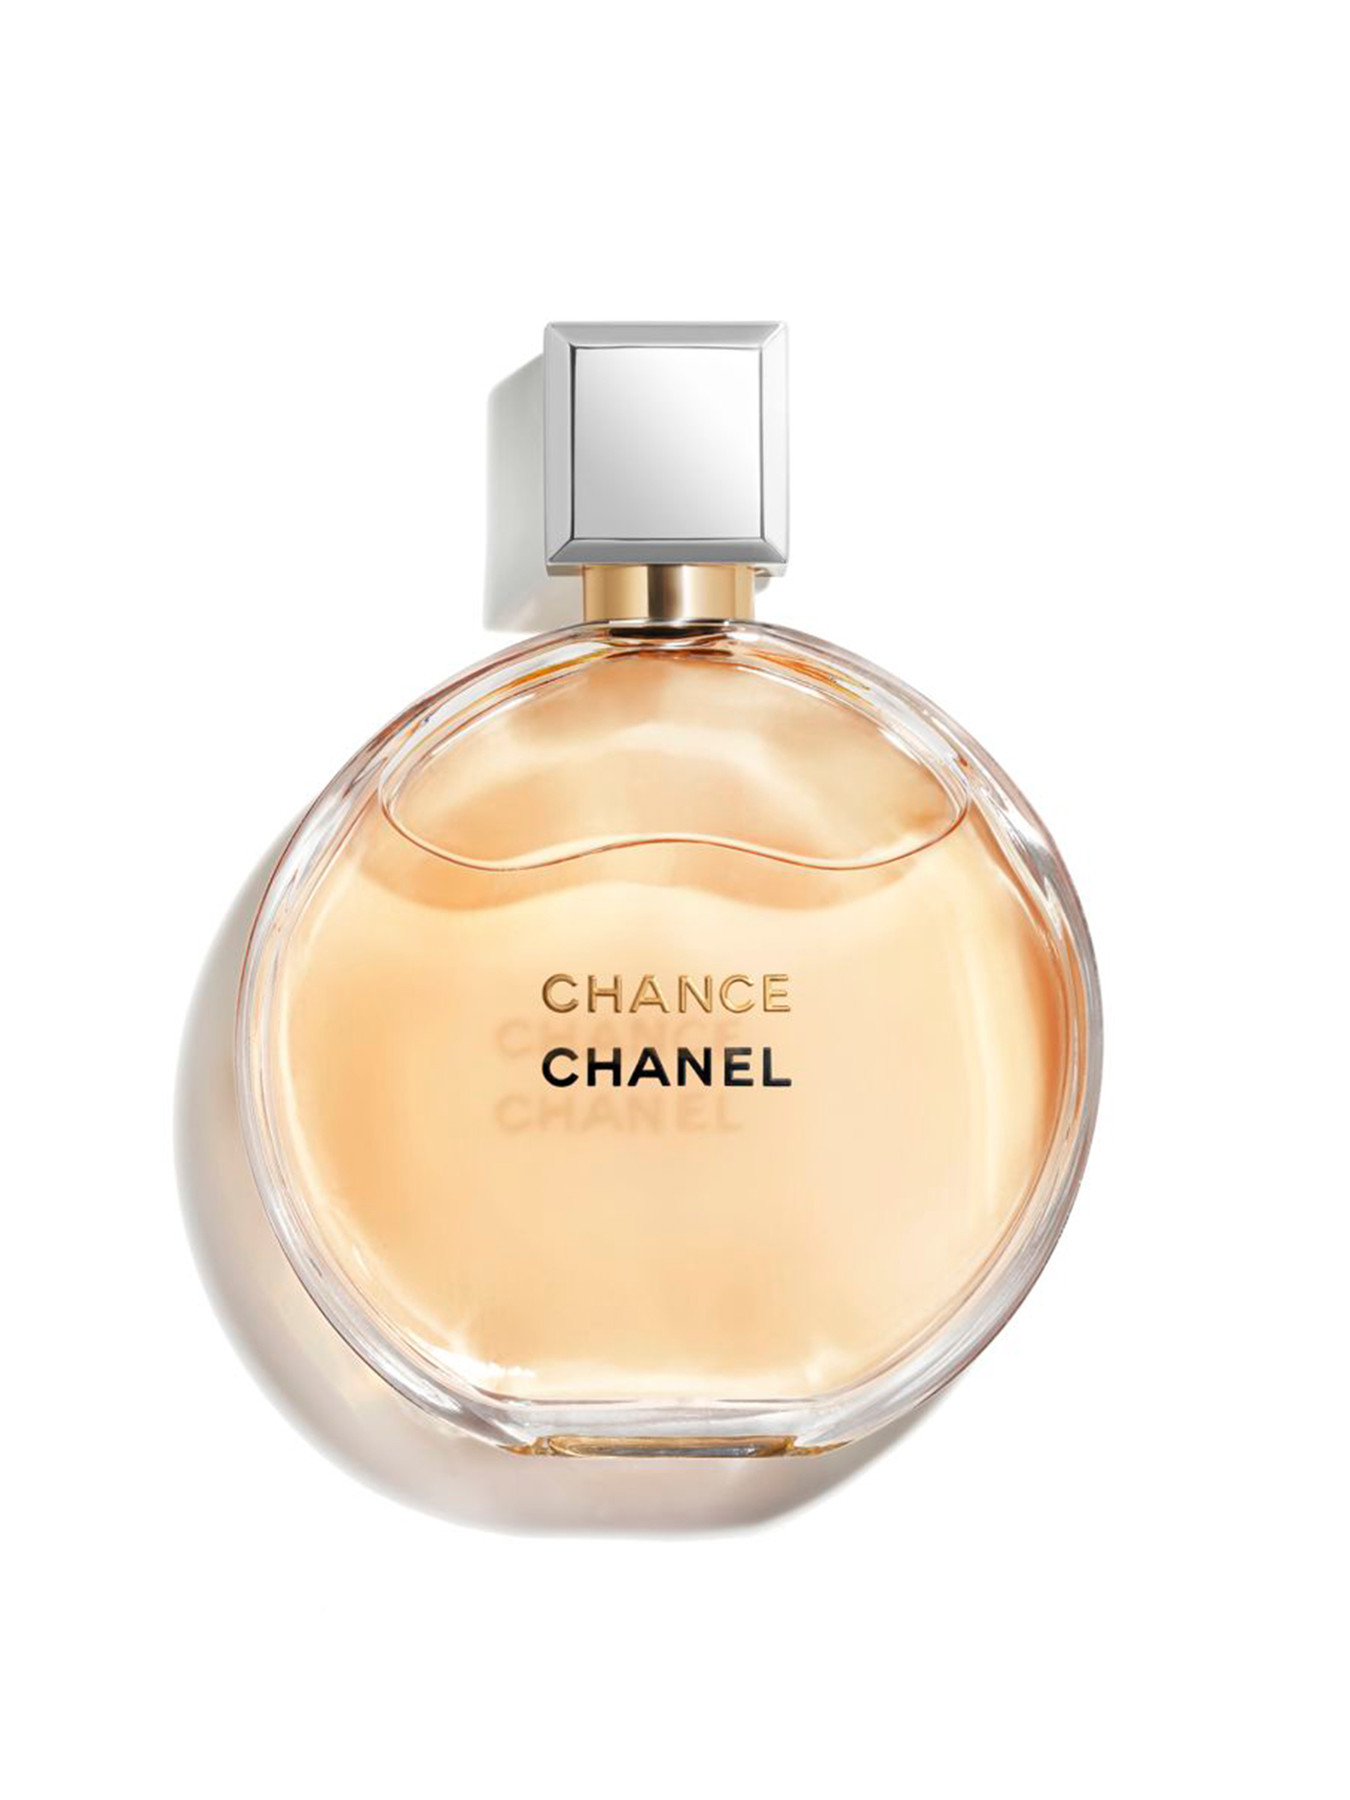 CHANEL CHANCE Eau De Parfum 100ML With Gift Box